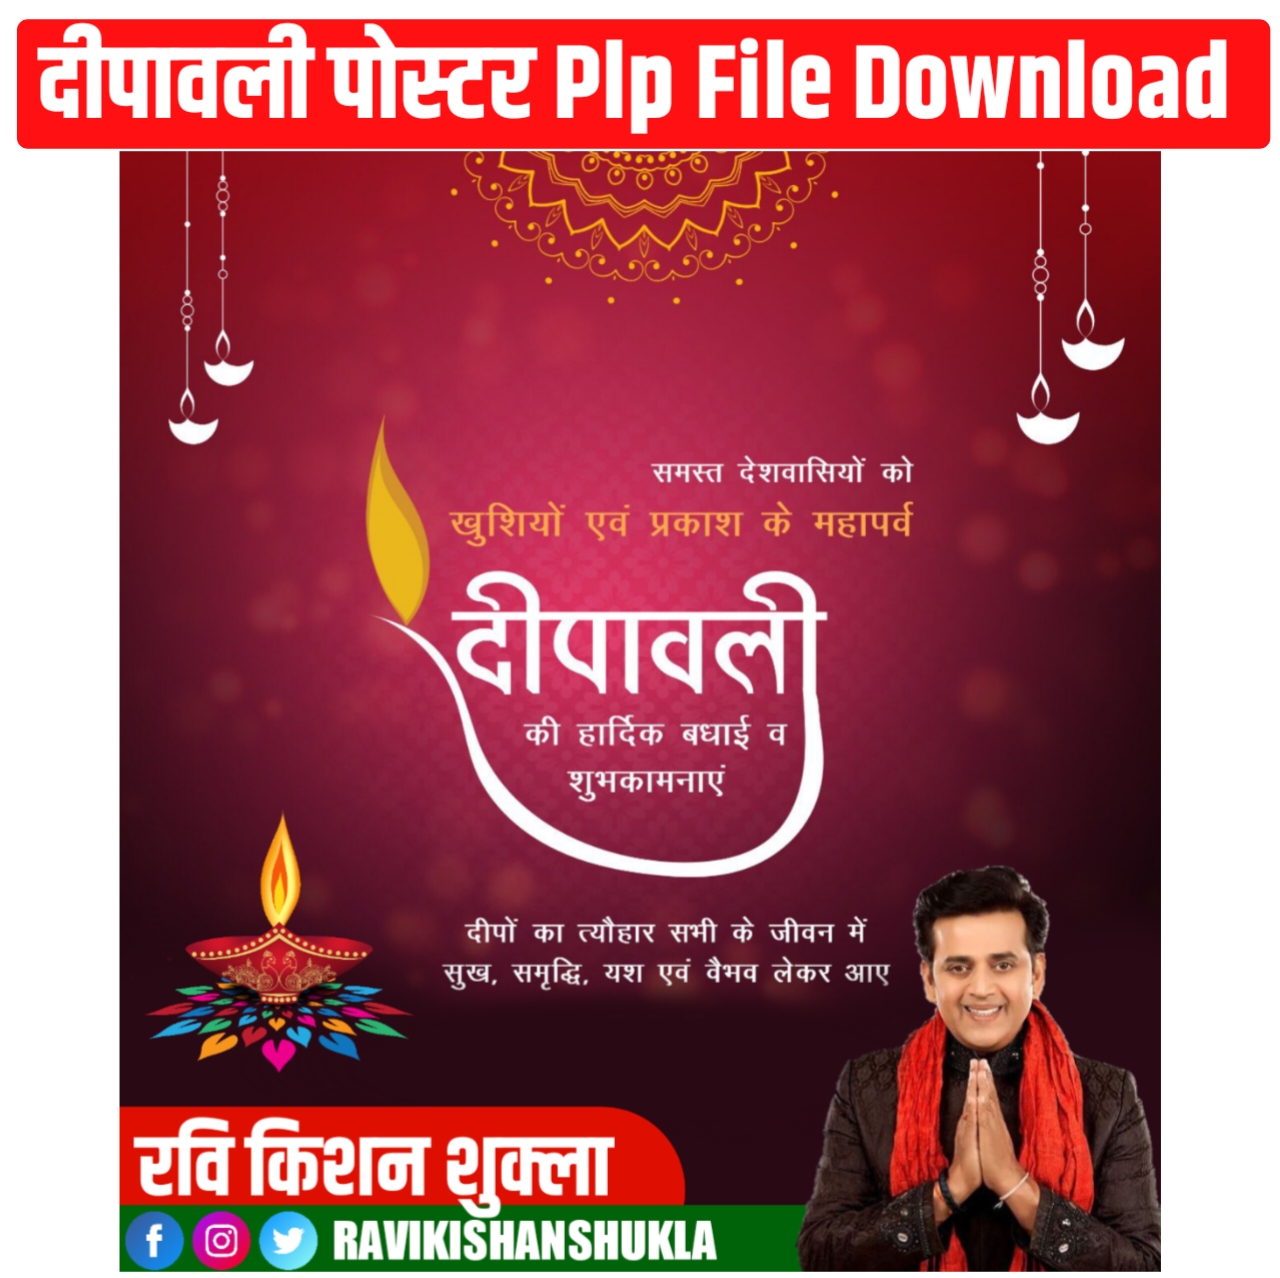 Diwali Poster Plp File HD Download